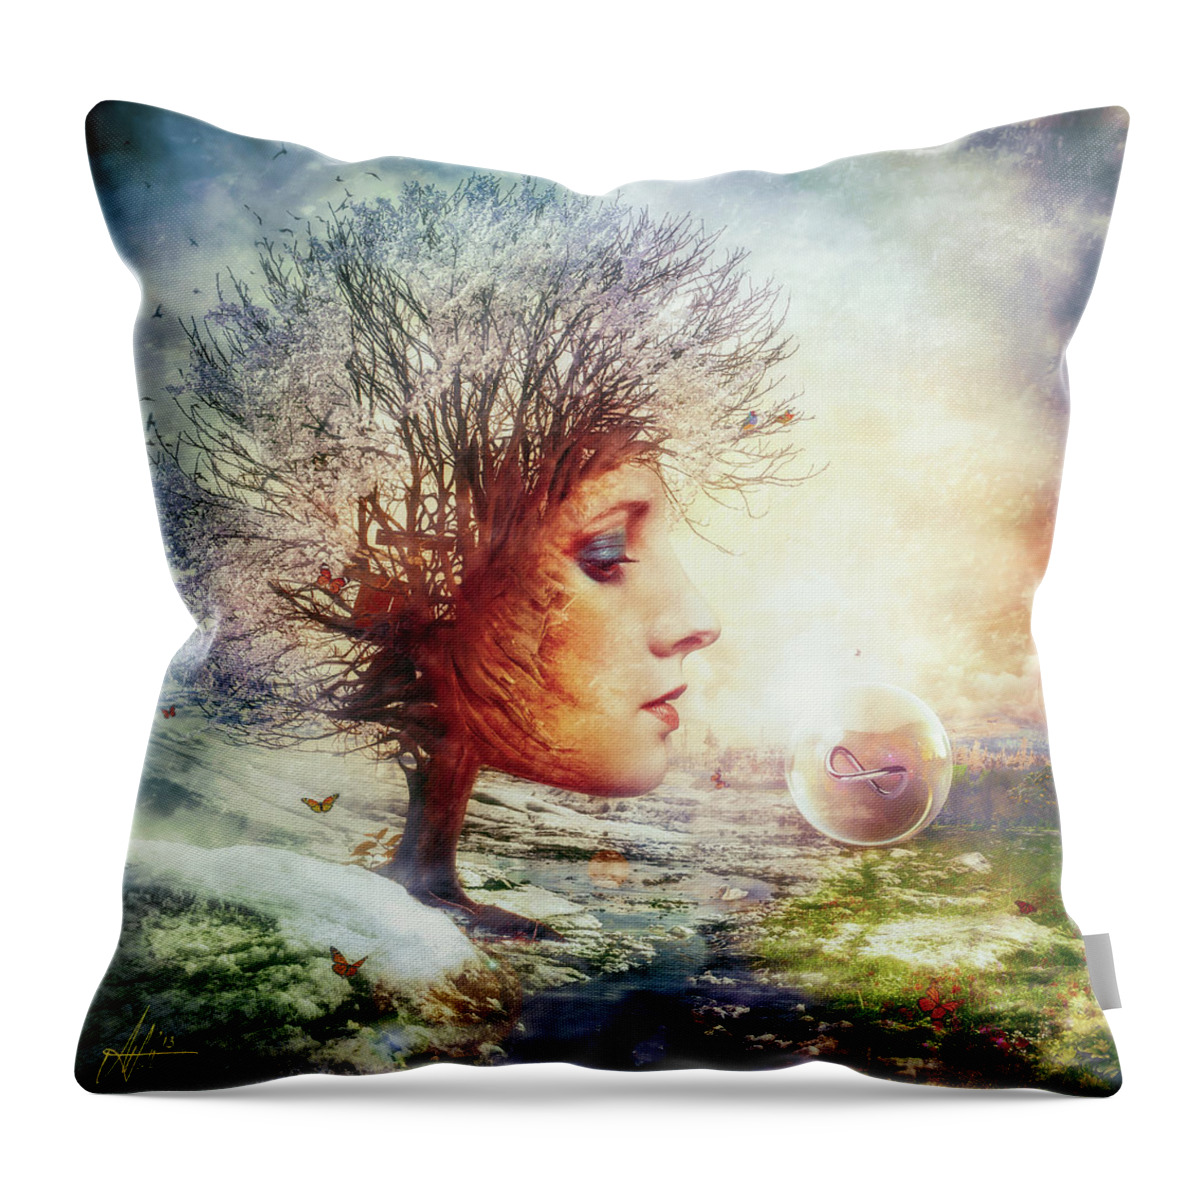 Mythology Throw Pillow featuring the digital art Treasure by Mario Sanchez Nevado